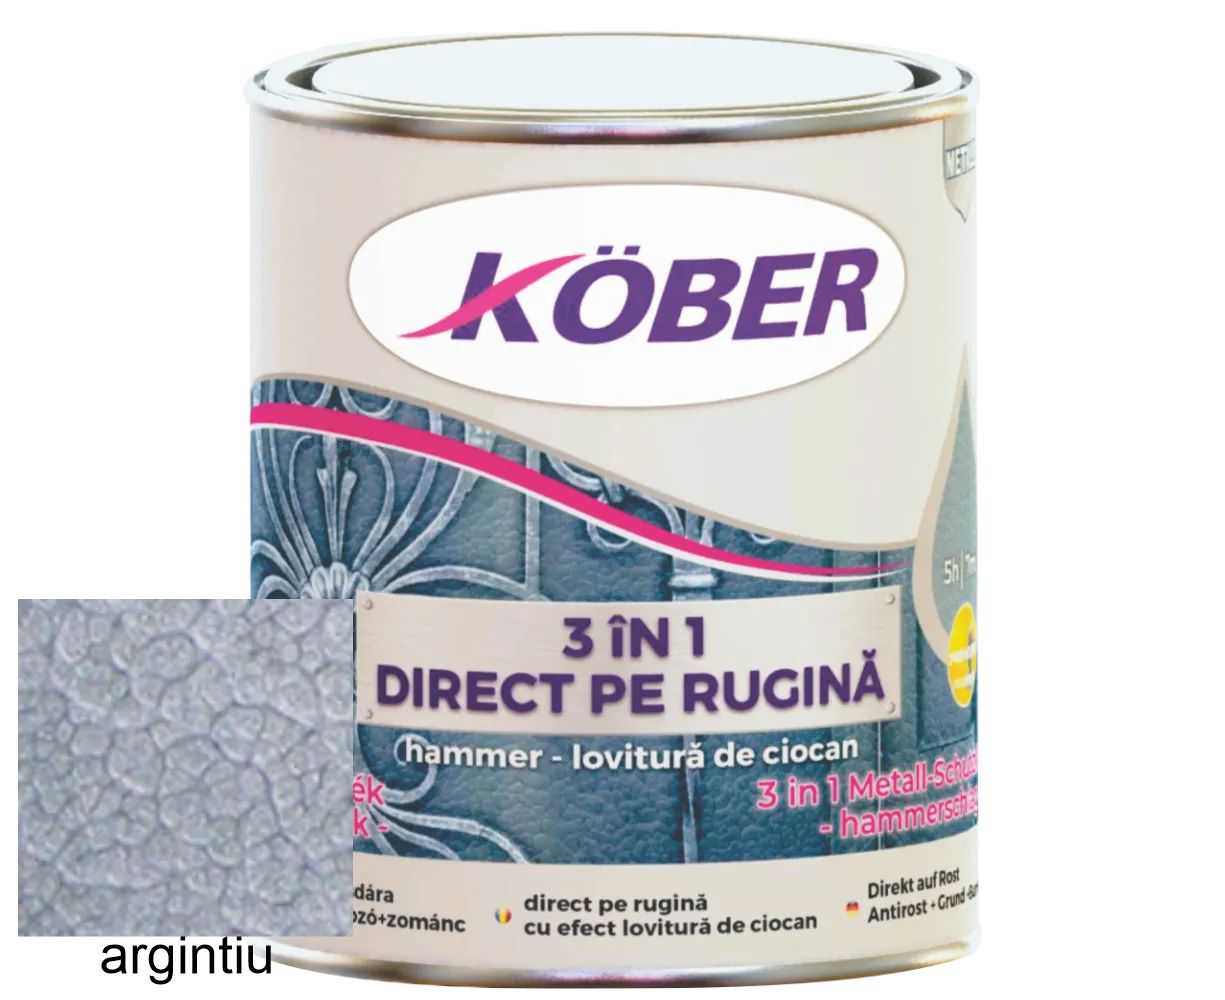 Vopsea alchidica pentru metal, Kober 3 in 1 Hammer, efect Lovitura de ciocan, int/ext, argintiu, 0.75 L